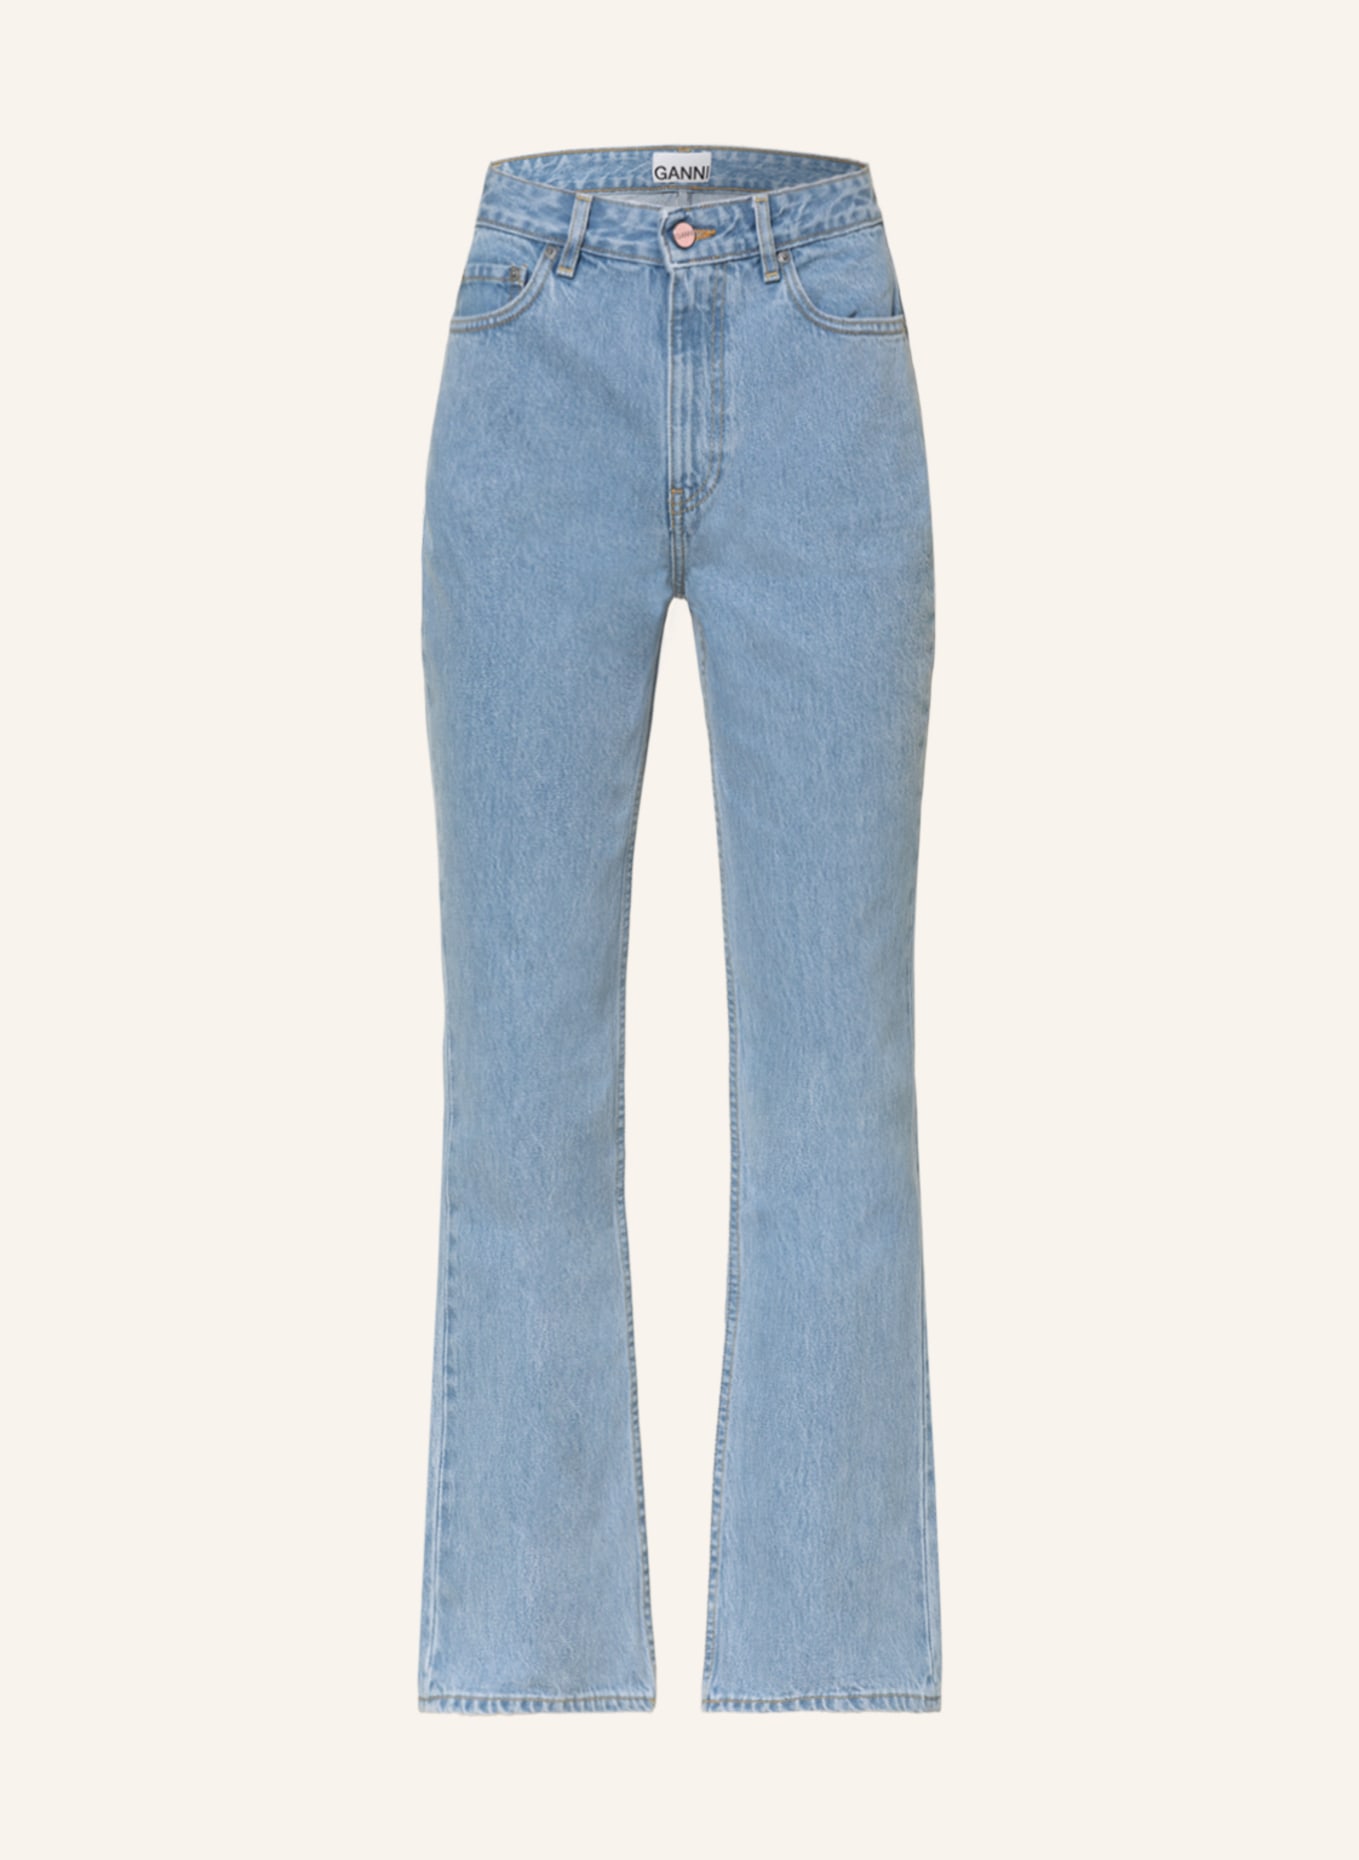 GANNI Flared Jeans , Farbe: 564 
LIGHT BLUE STONE(Bild null)